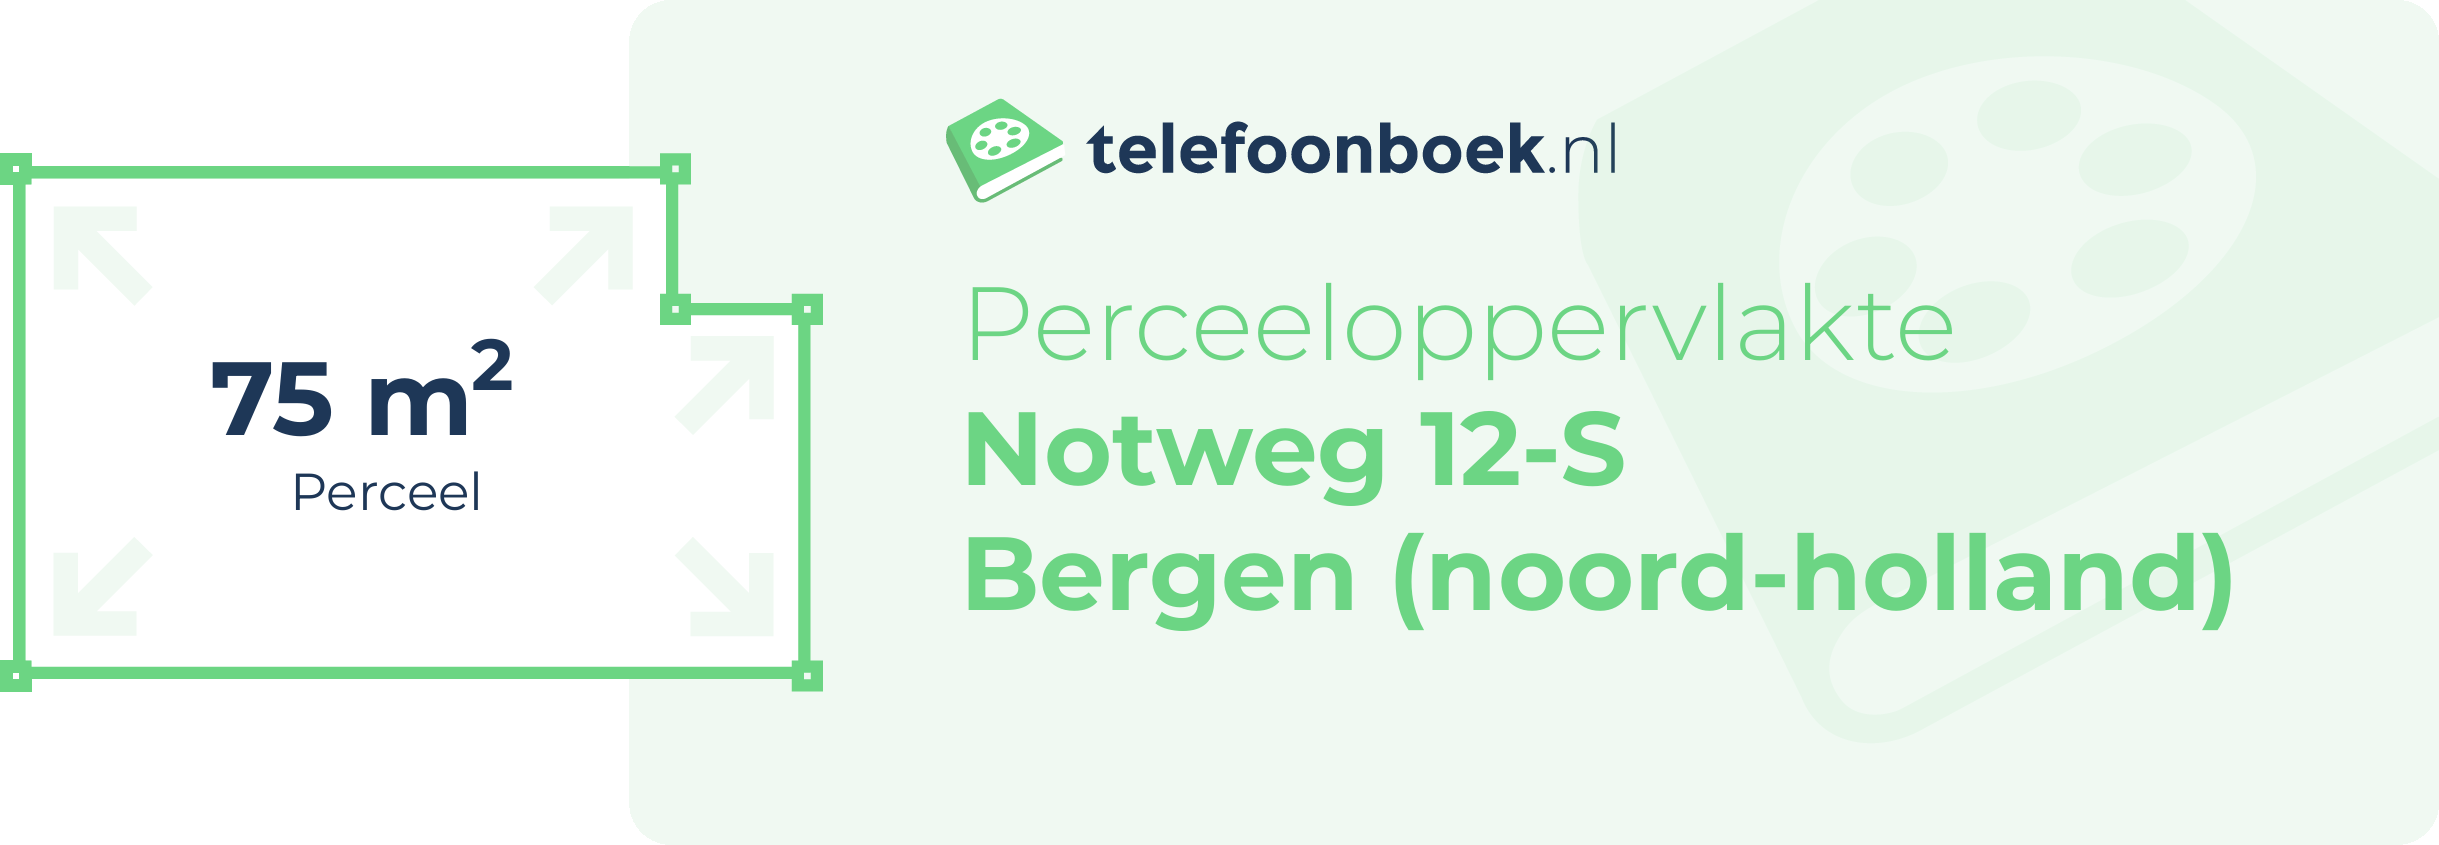 Perceeloppervlakte Notweg 12-S Bergen (Noord-Holland)